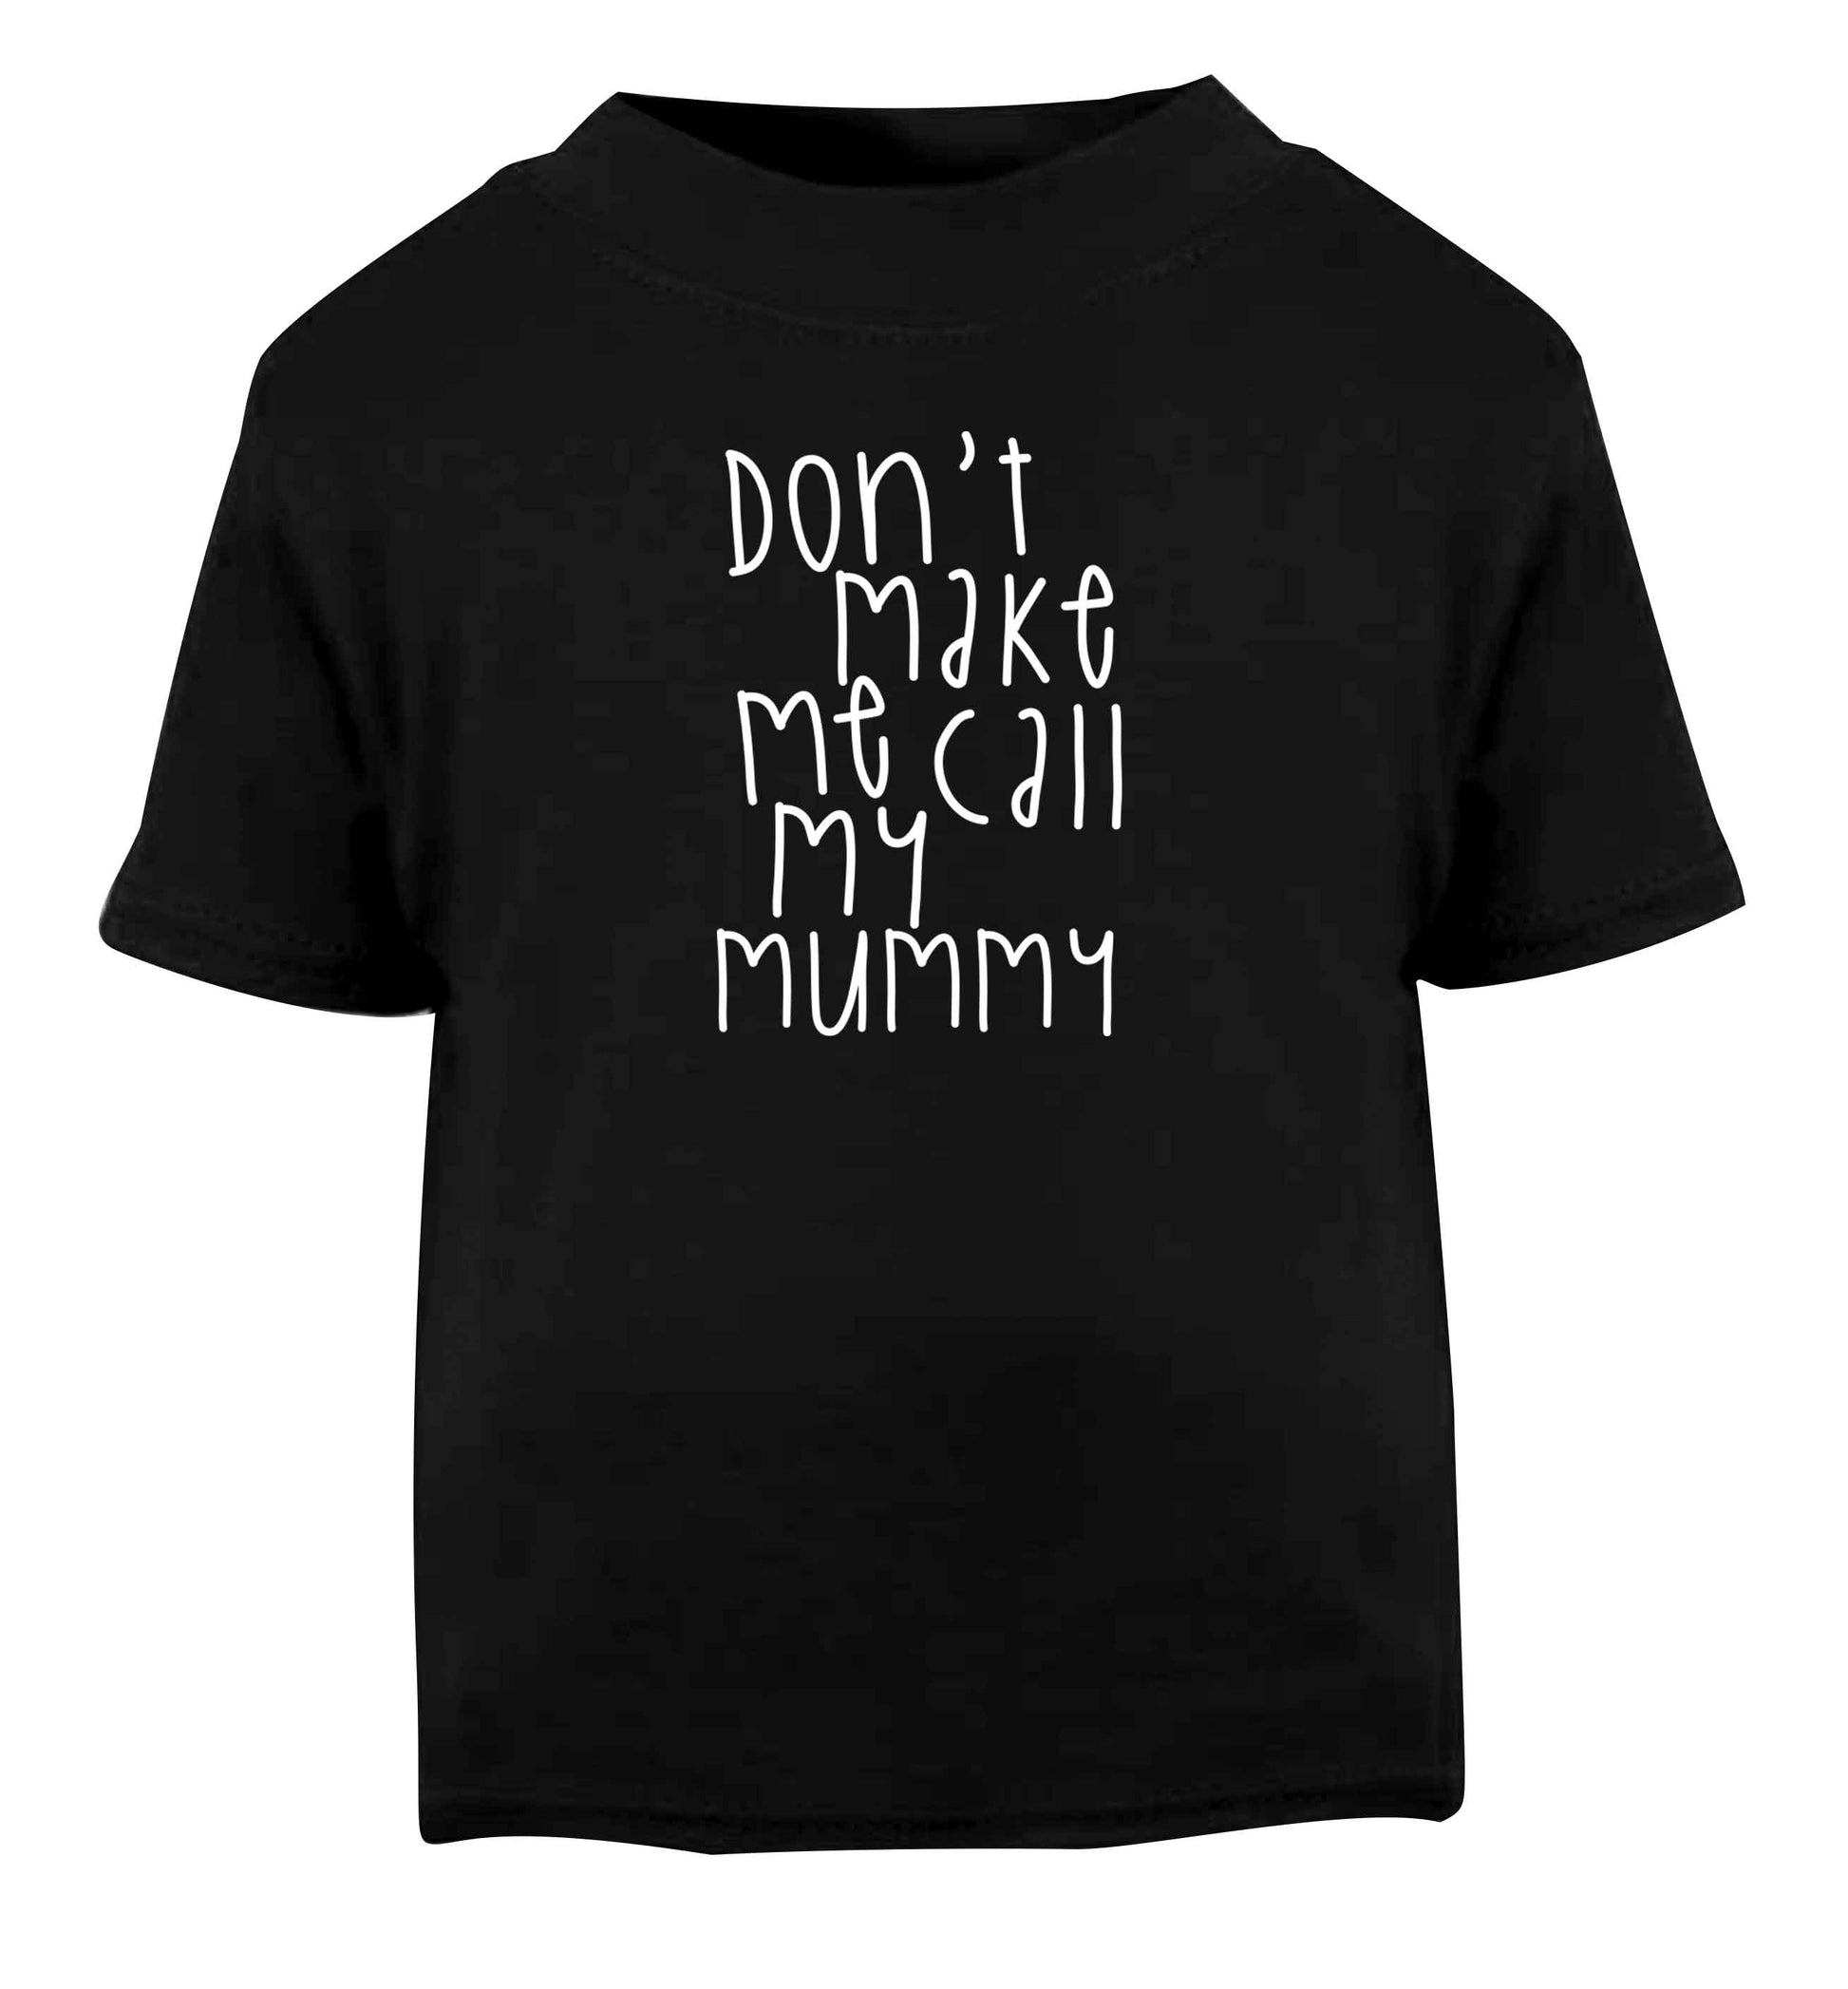 Don't make me call my mummy Black baby toddler Tshirt 2 years